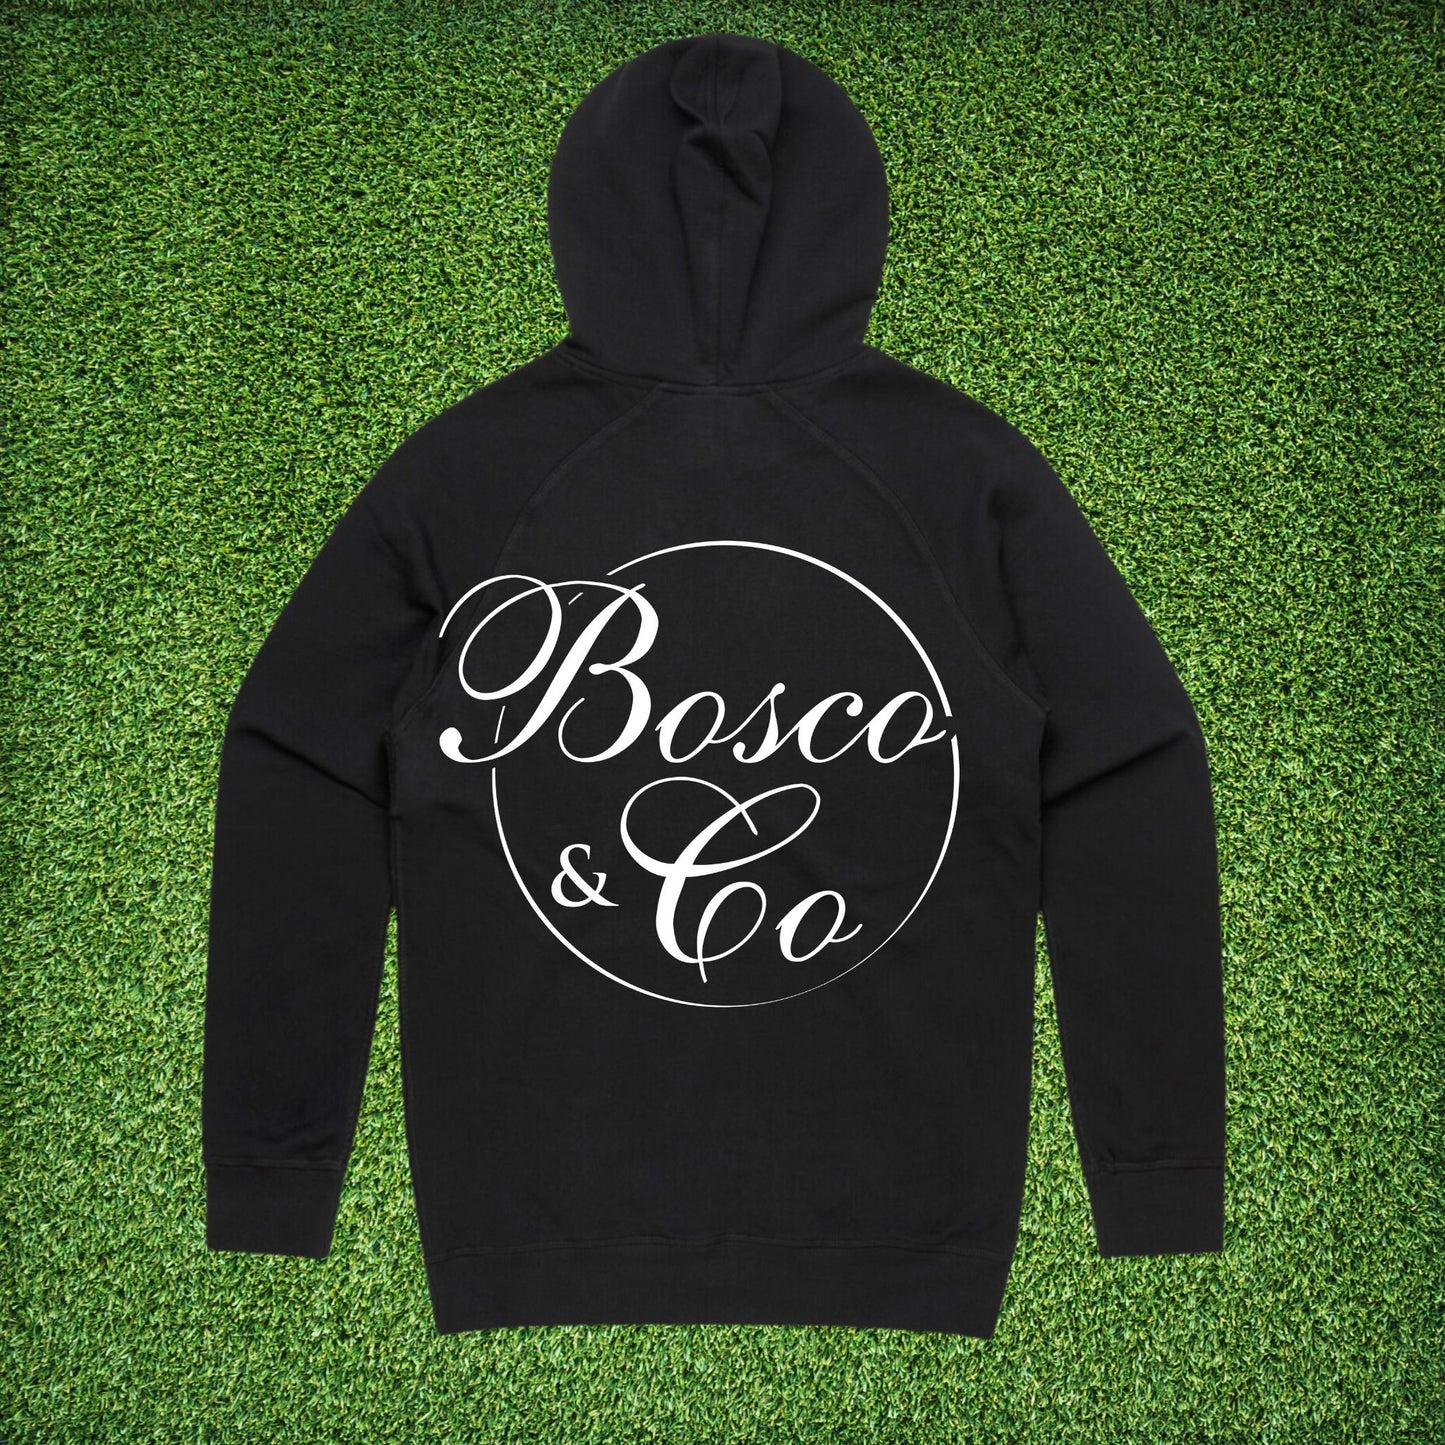 Bosco & Co Hoodies 23